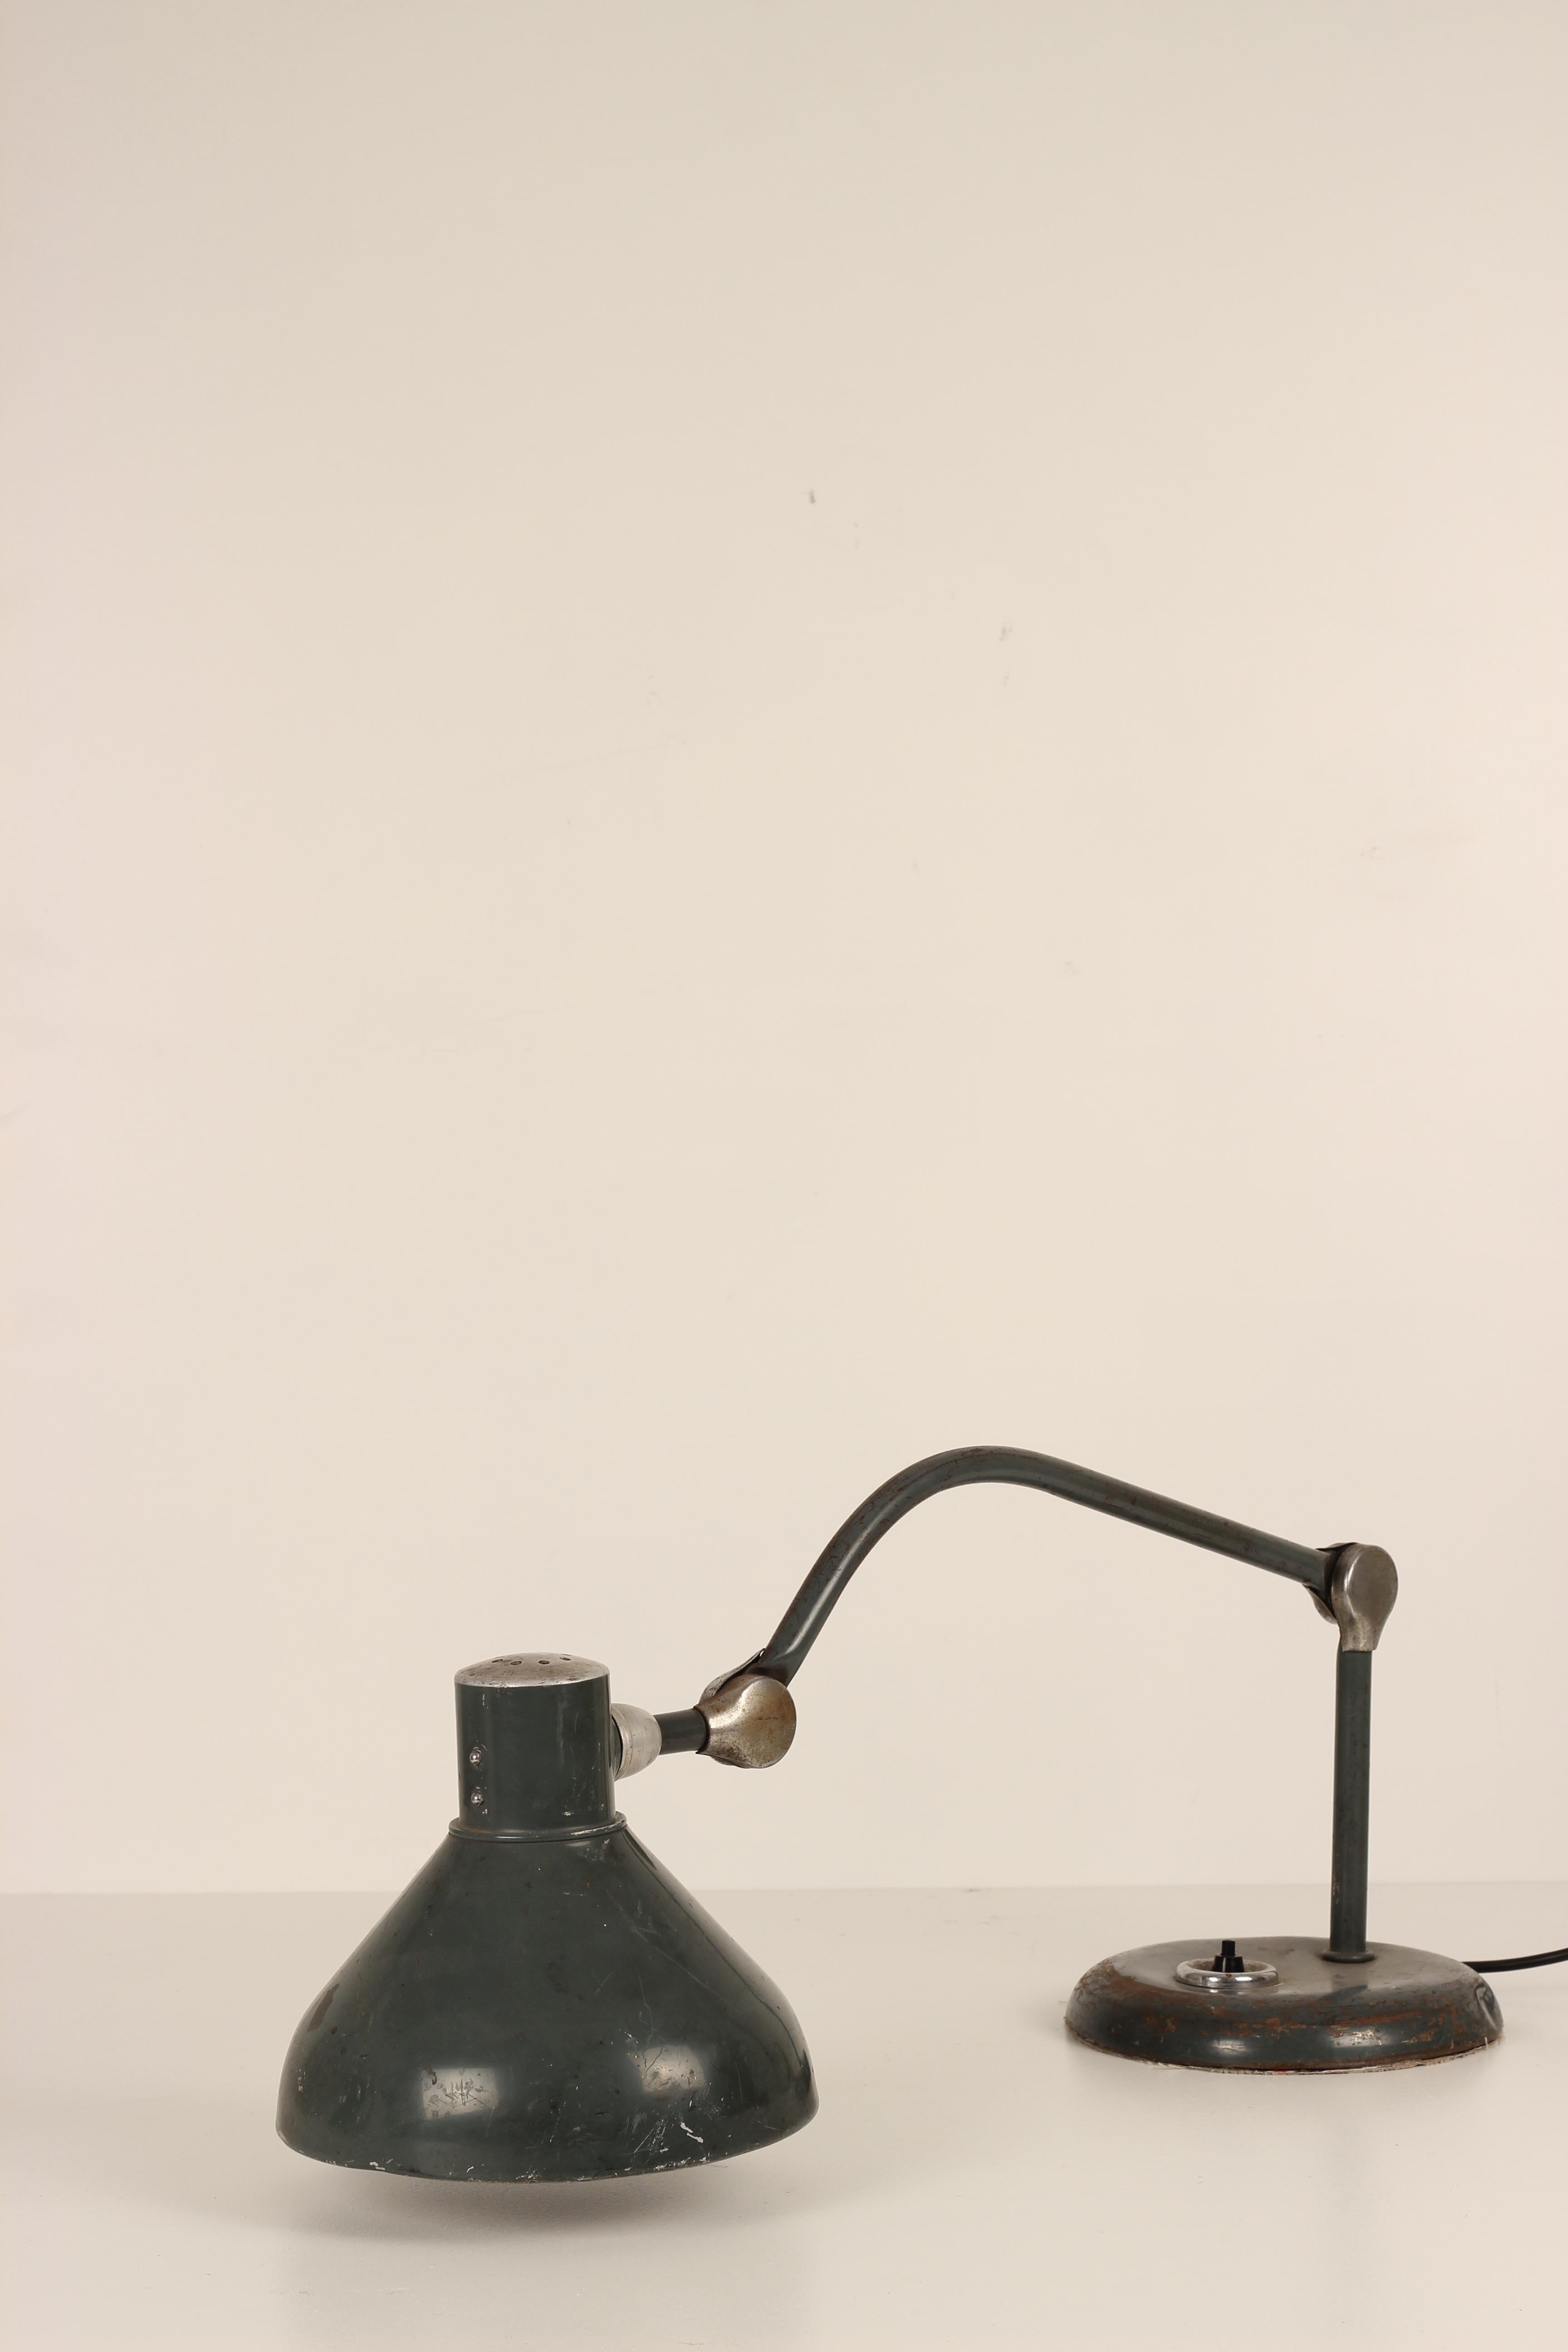 Pressed Mid-Century Modern Industrial Fully Adjustable Table or Desk Lamp